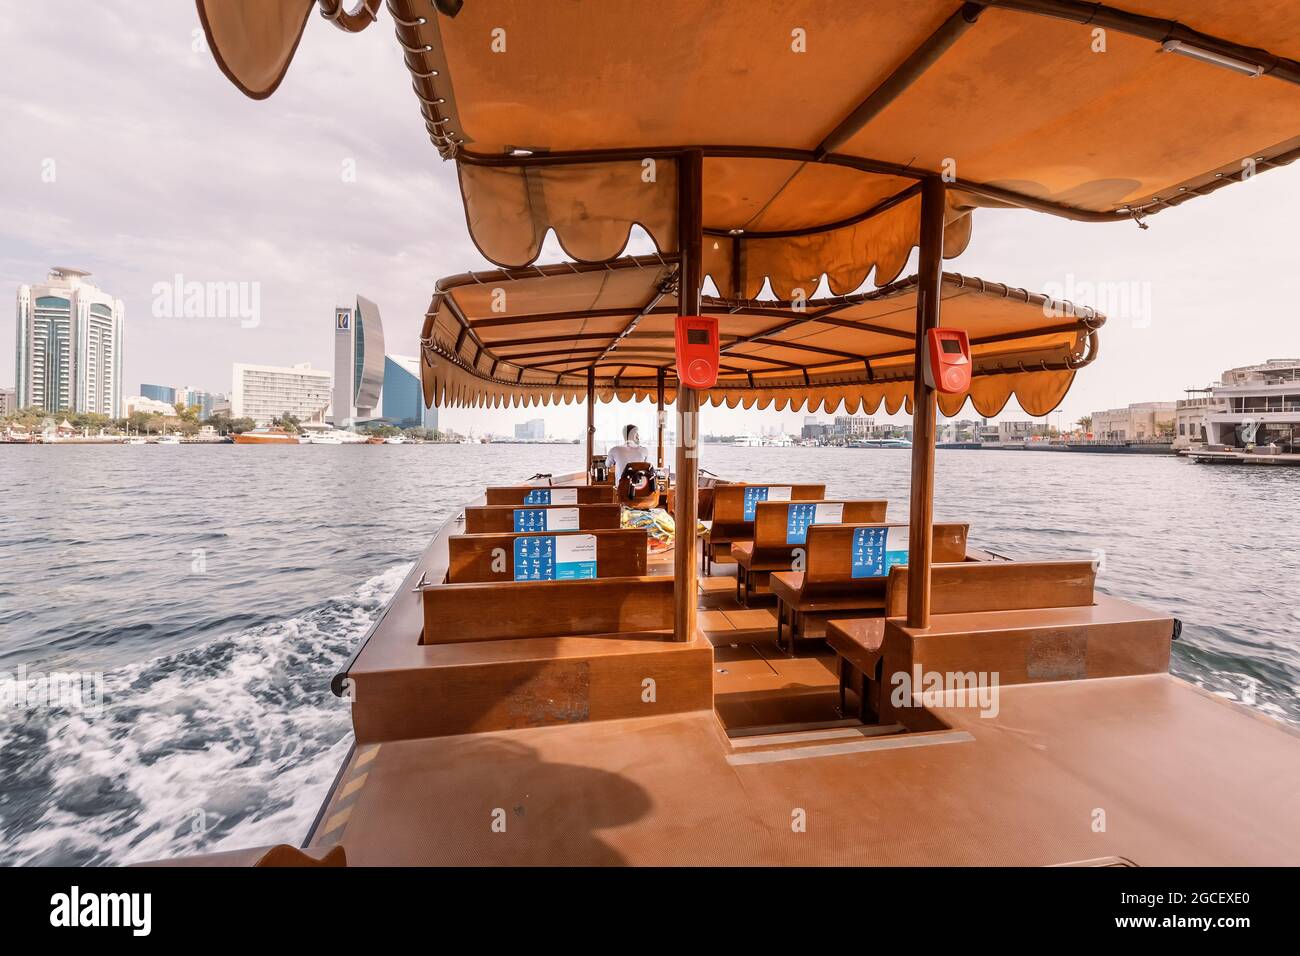 23 February 2021, Dubai, UAE: Empty ferry boat with no passengers cruising between the banks of the Dubai Creek Canal. Public transportation Stock Photo